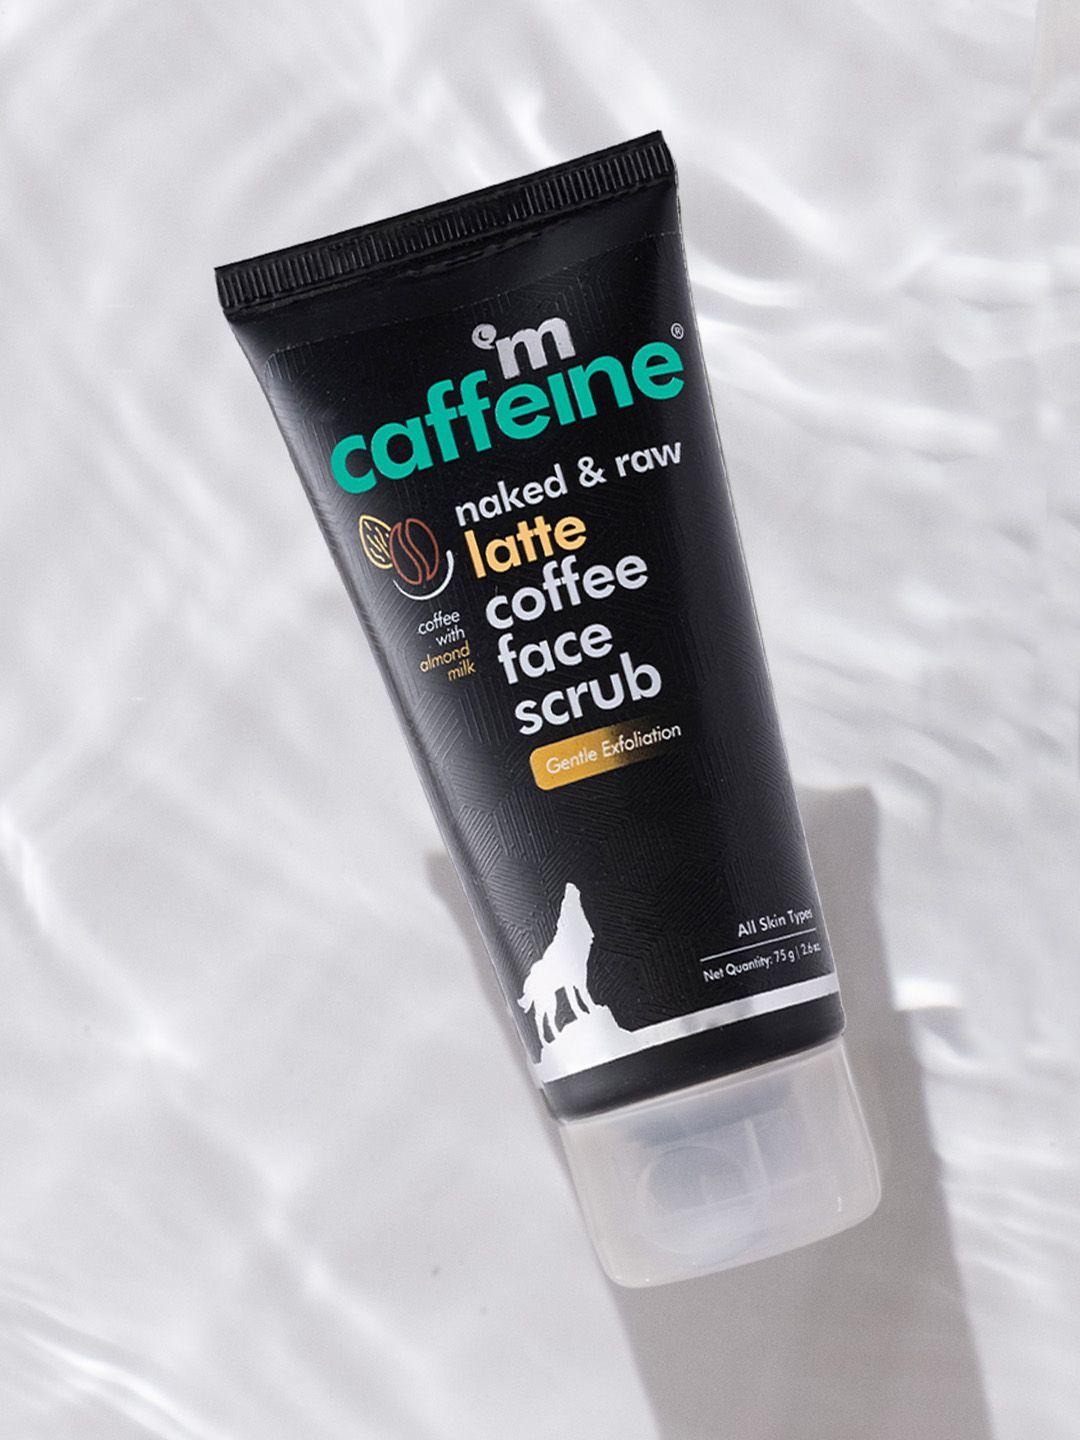 mcaffeine coffee & milk moisturizing face scrub for gentle exfoliation & skin nourishment